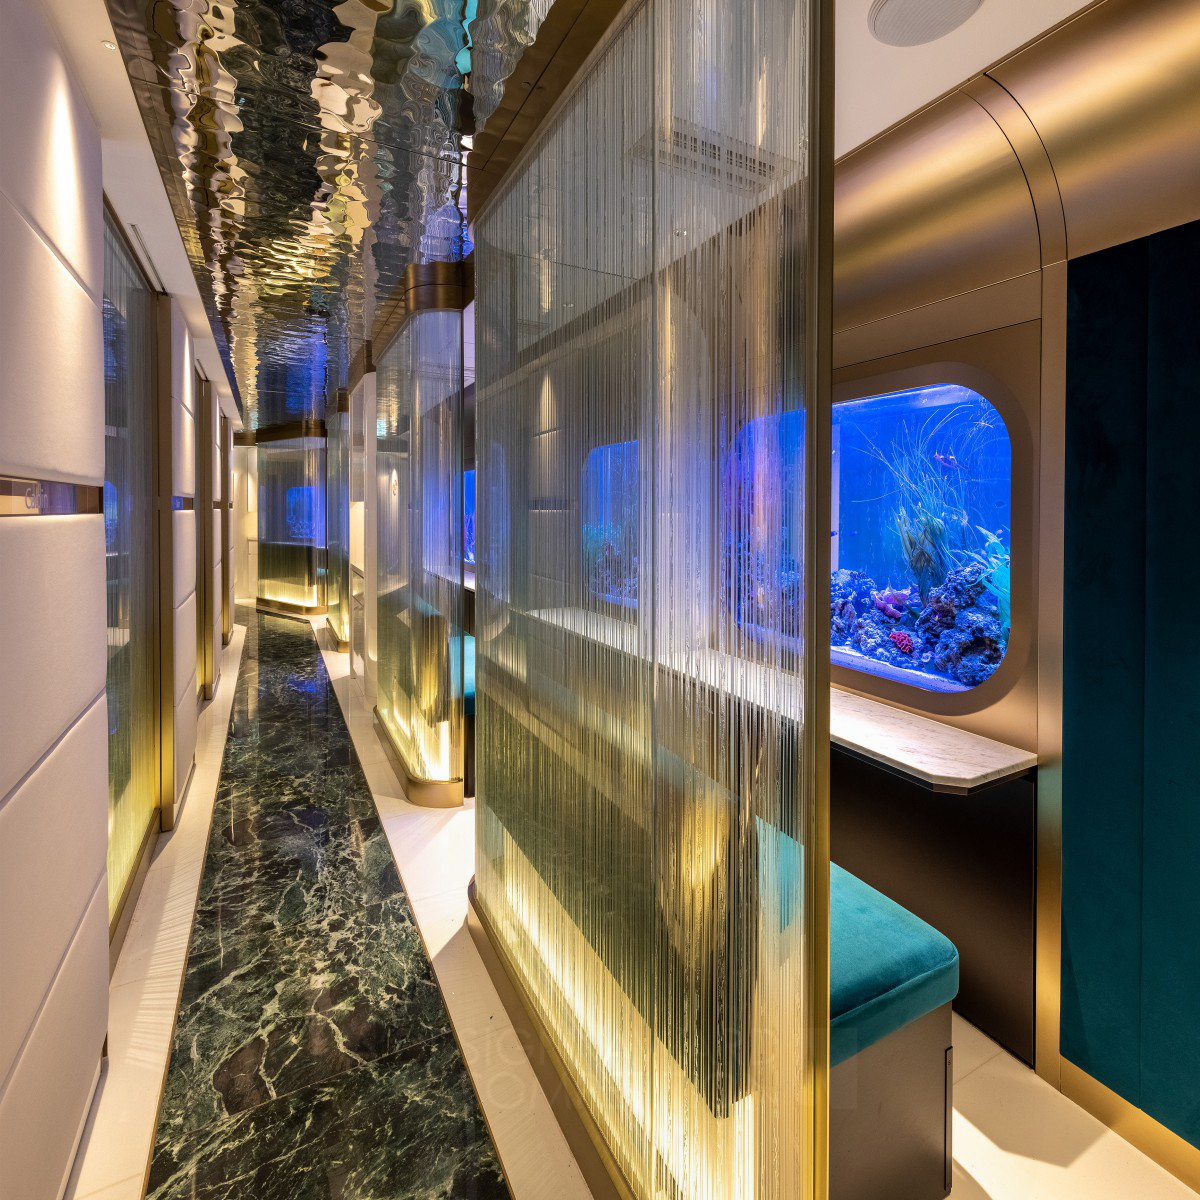 The Grand Blue Express Restaurant by Tetsuya Matsumoto Silver Interior Space and Exhibition Design Award Winner 2022 